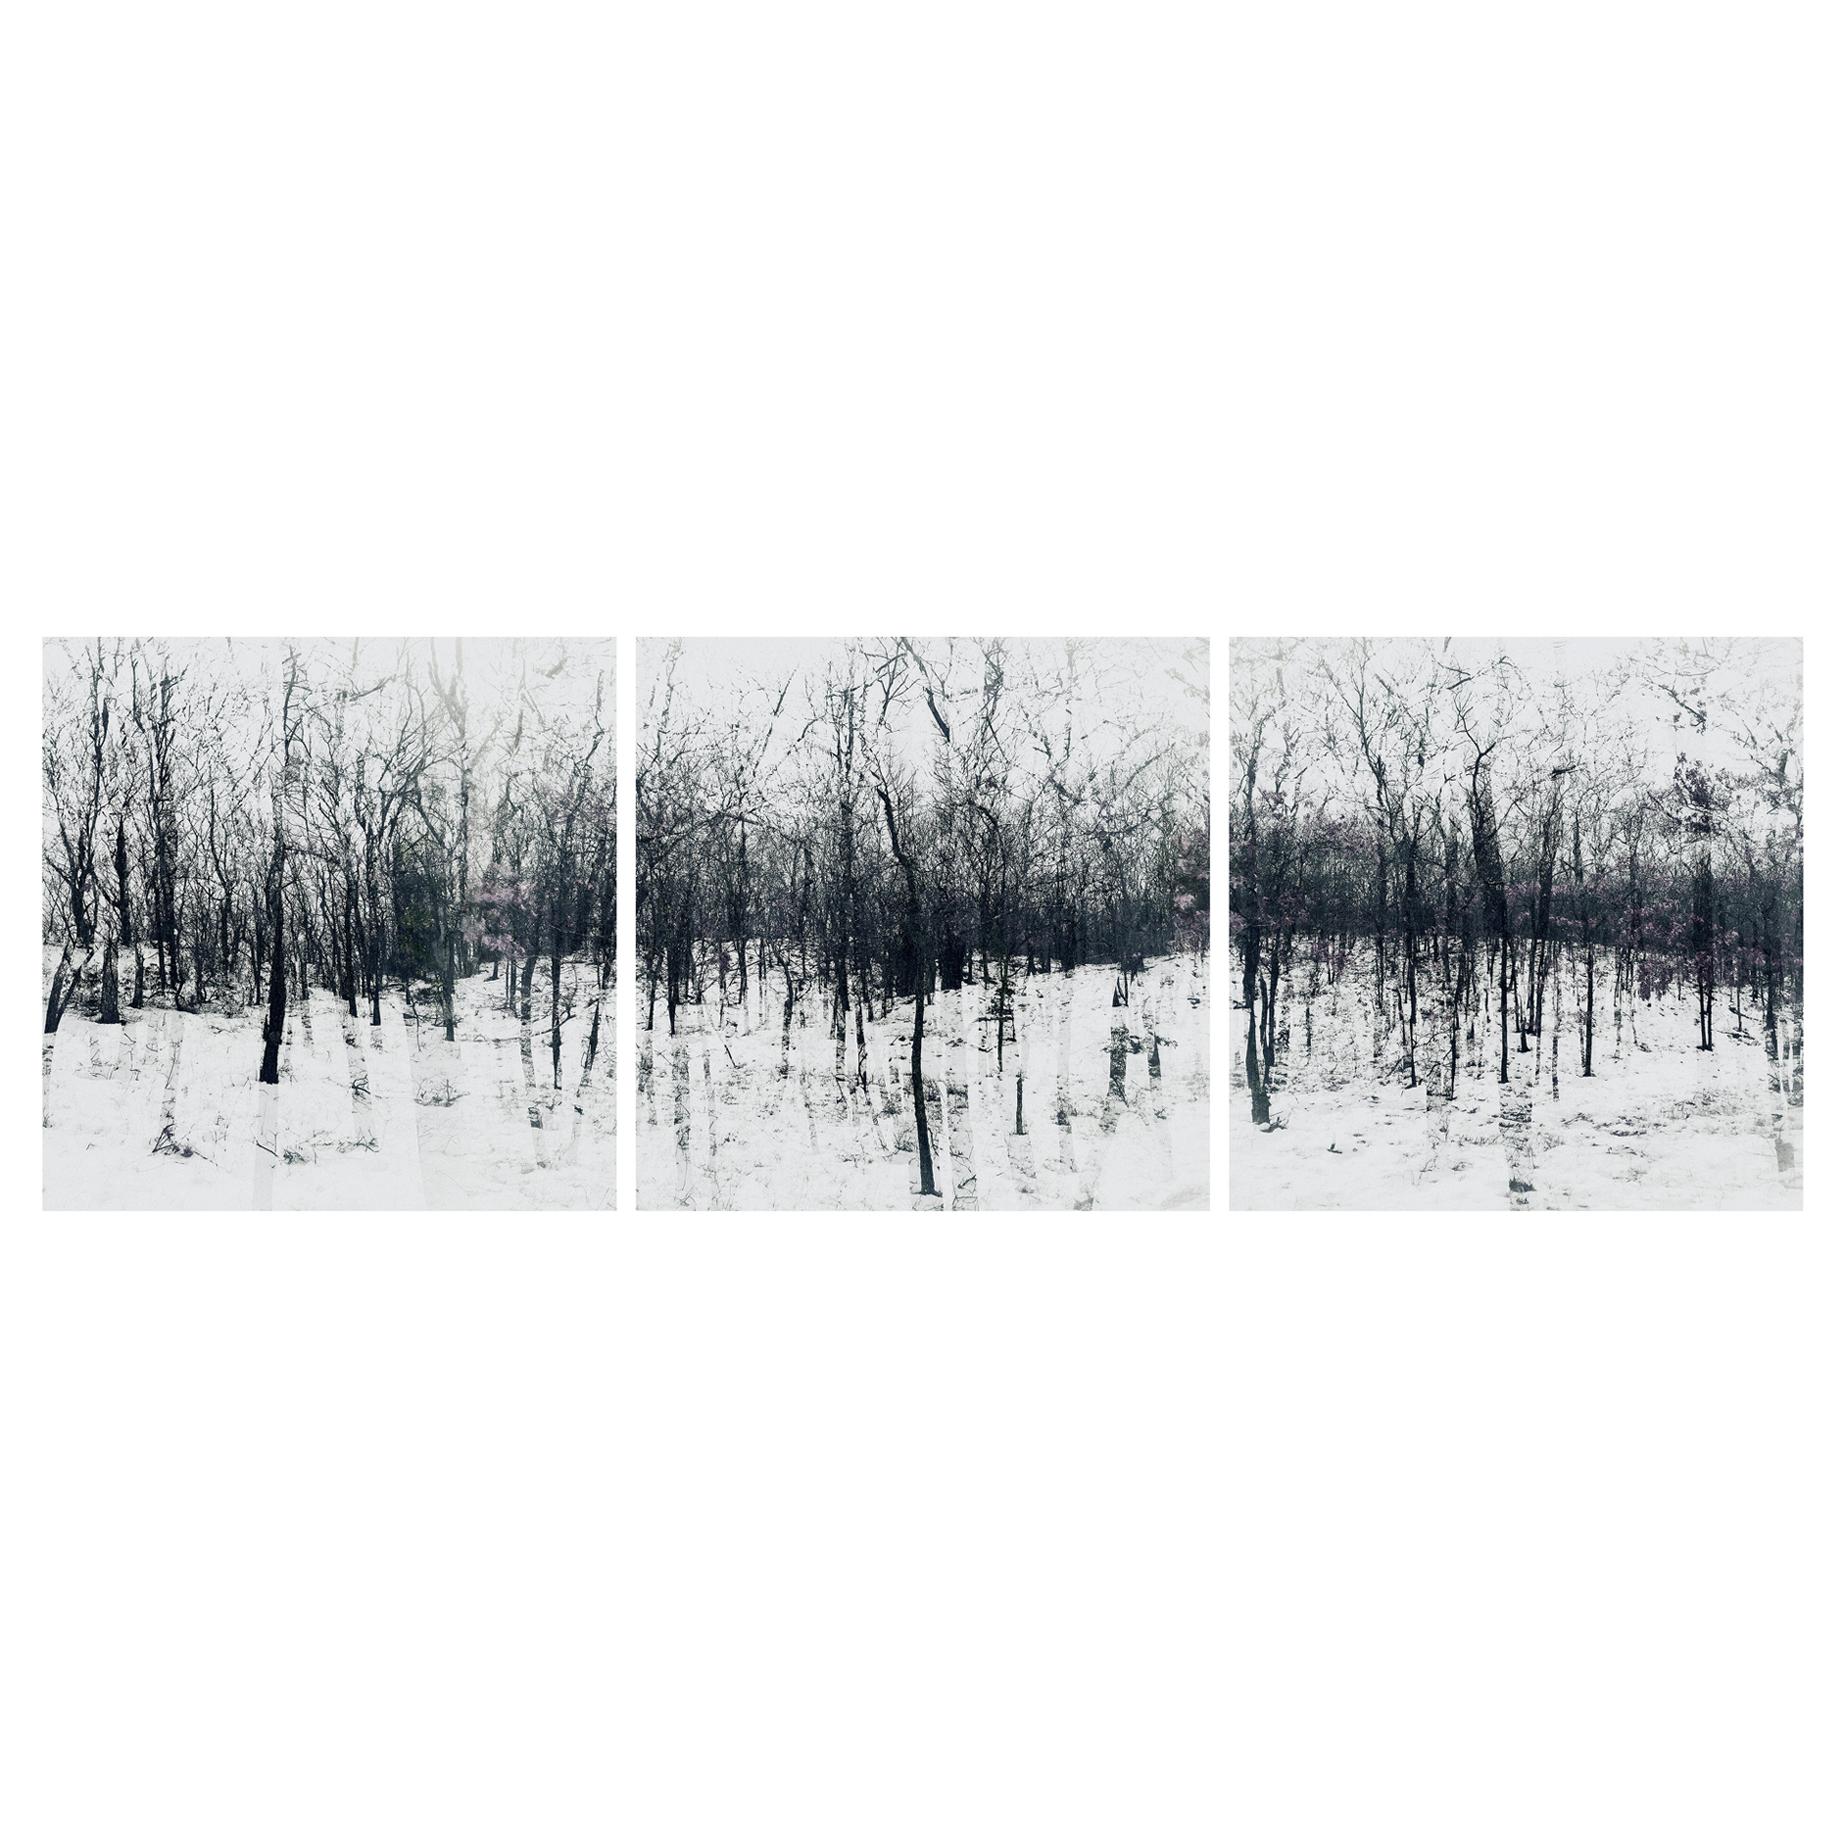 Elena Lyakir Triptych, Feels Like Home. Bridgehampton, NY Photograph, 2016